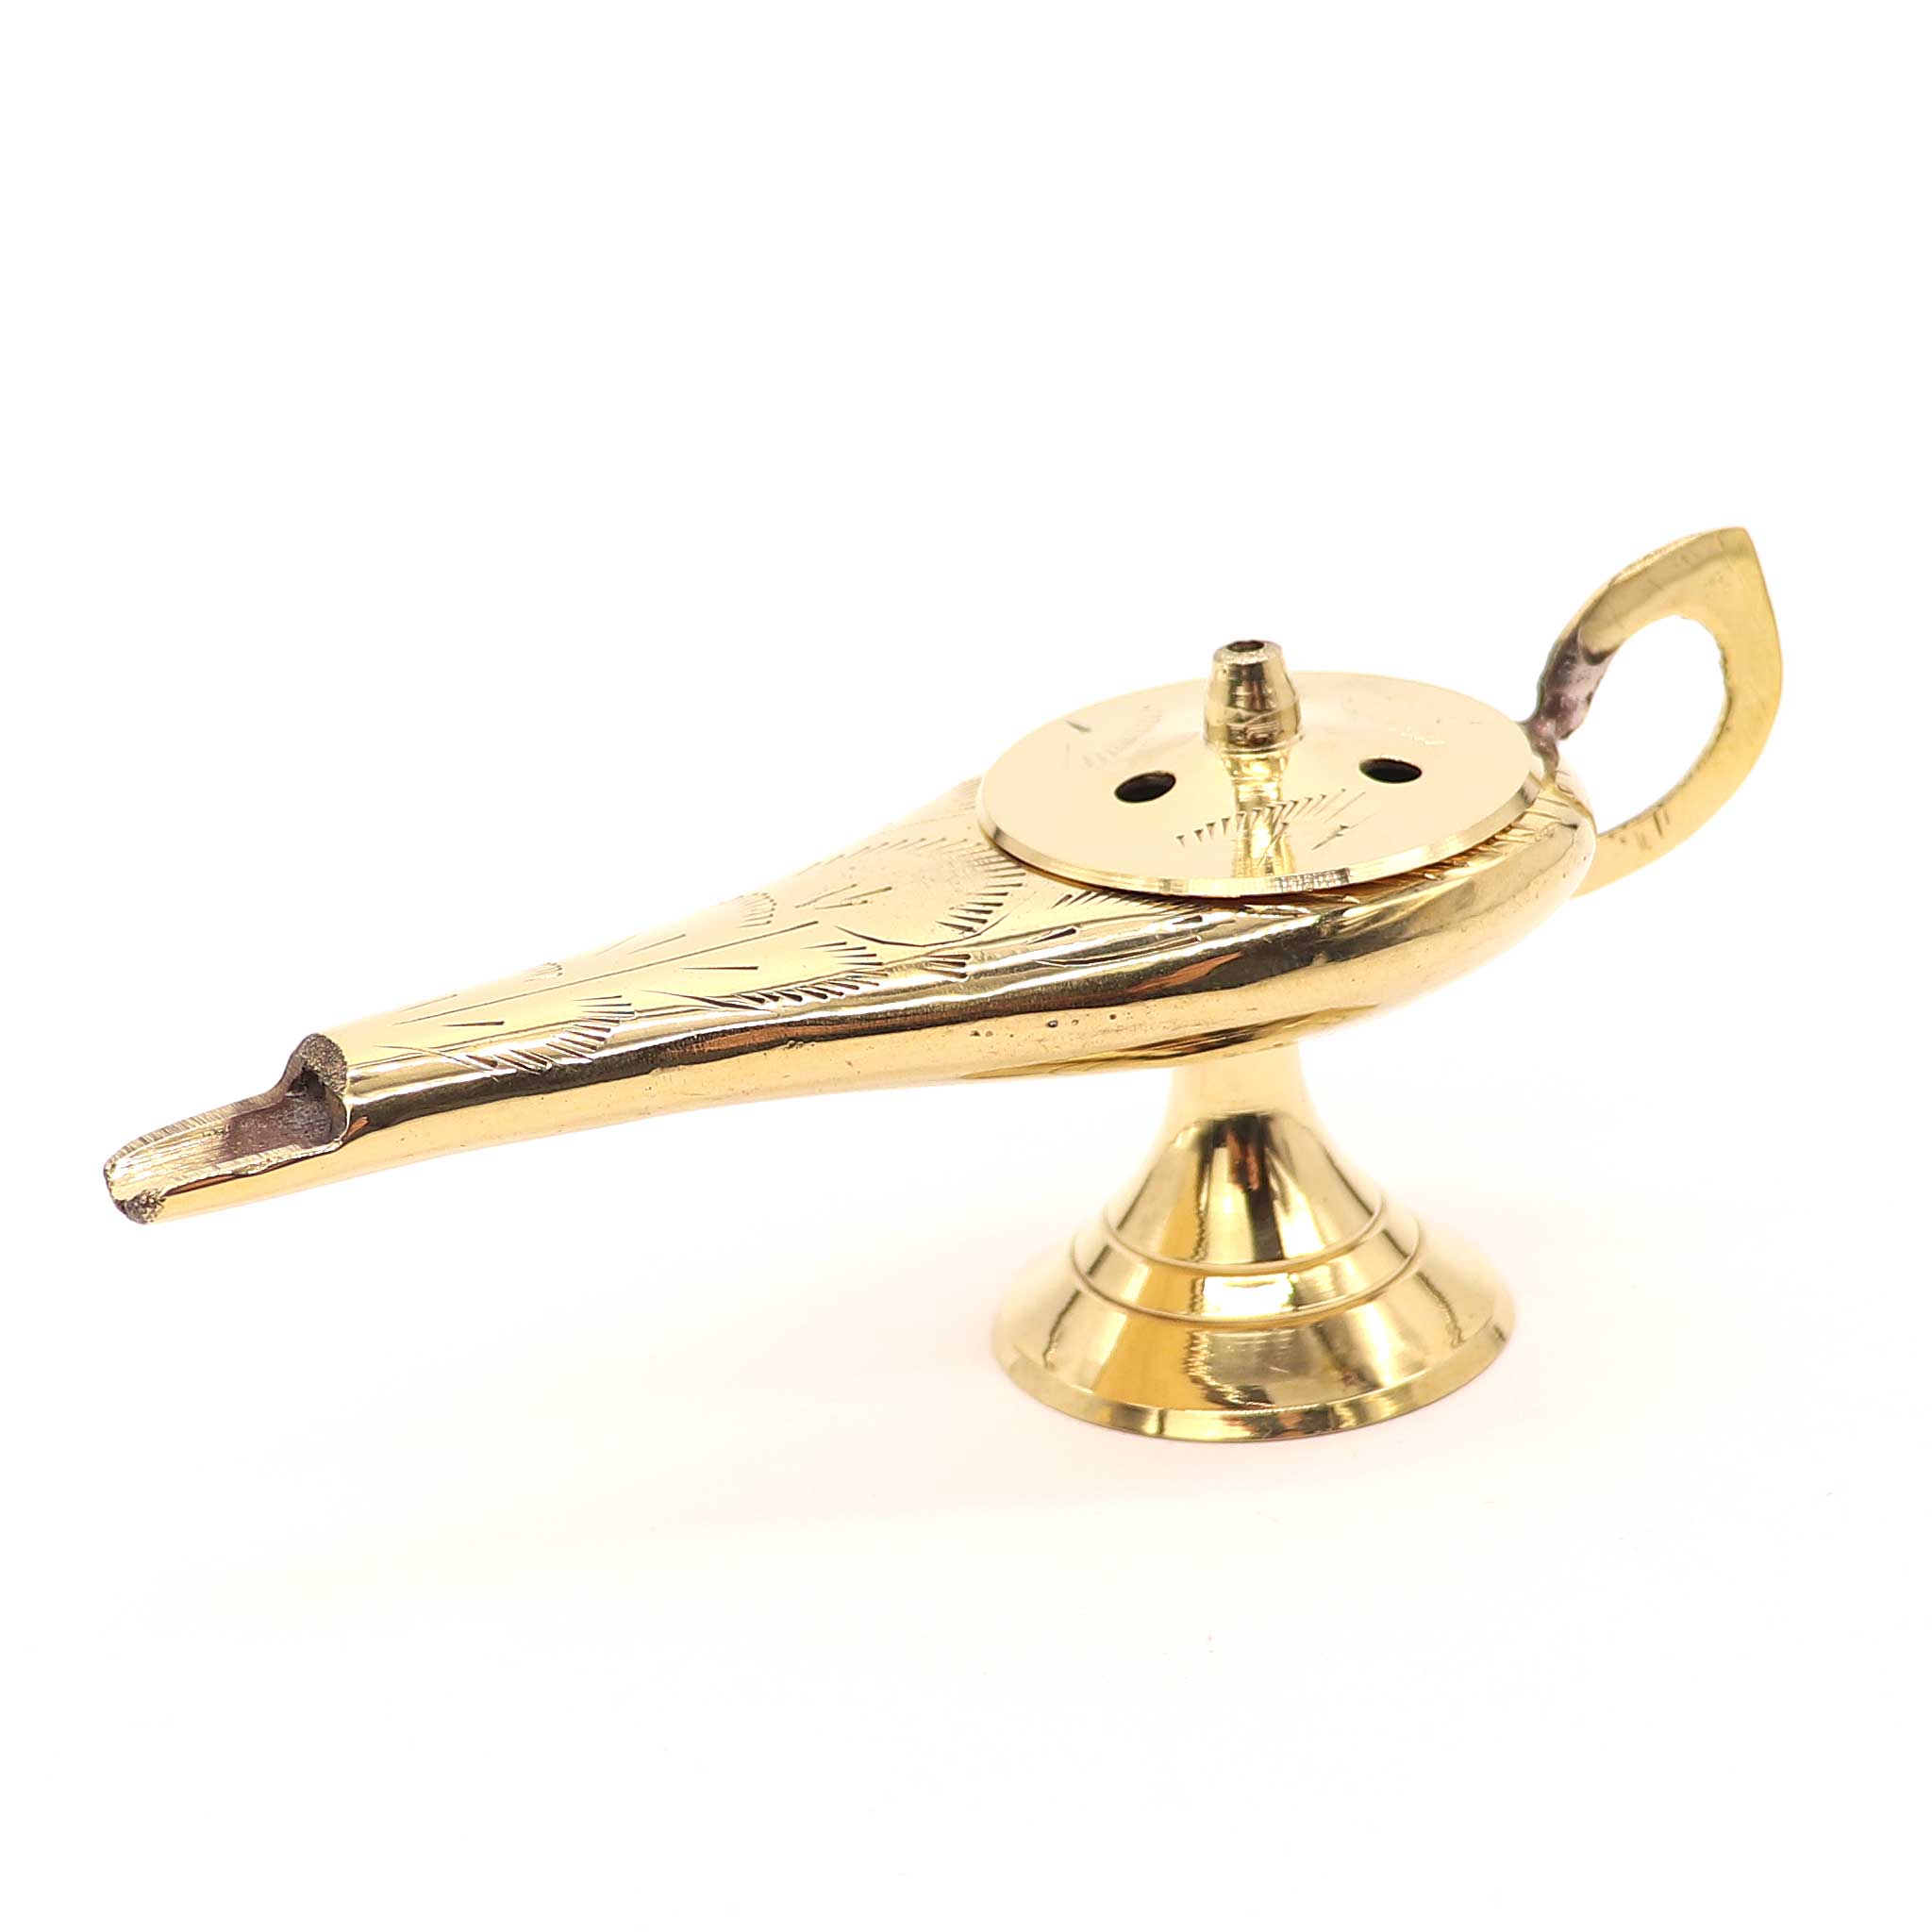 Antique Etched Solid Brass Incense Burner Aladdin Style Lamp 